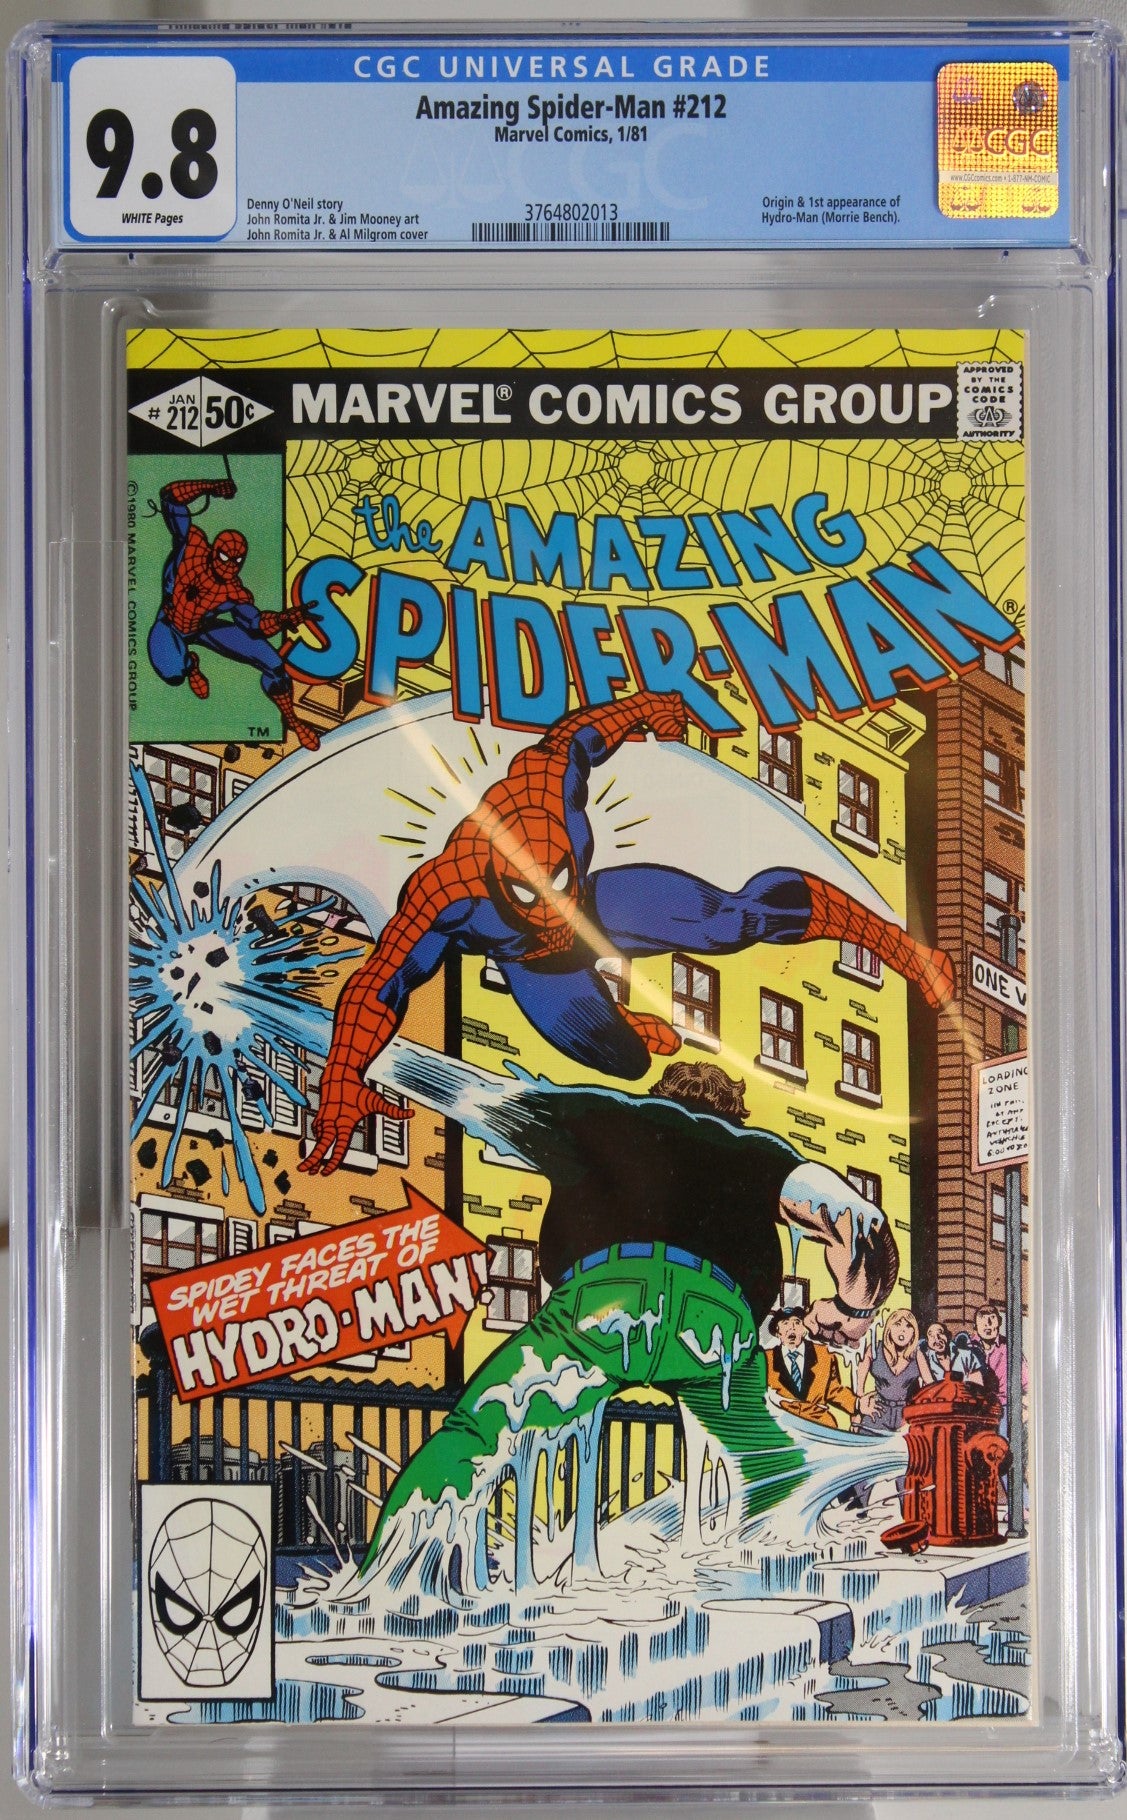 Amazing Spider-Man #212 - CGC 9.8 - Origin & 1st appearance of Hydro-Man